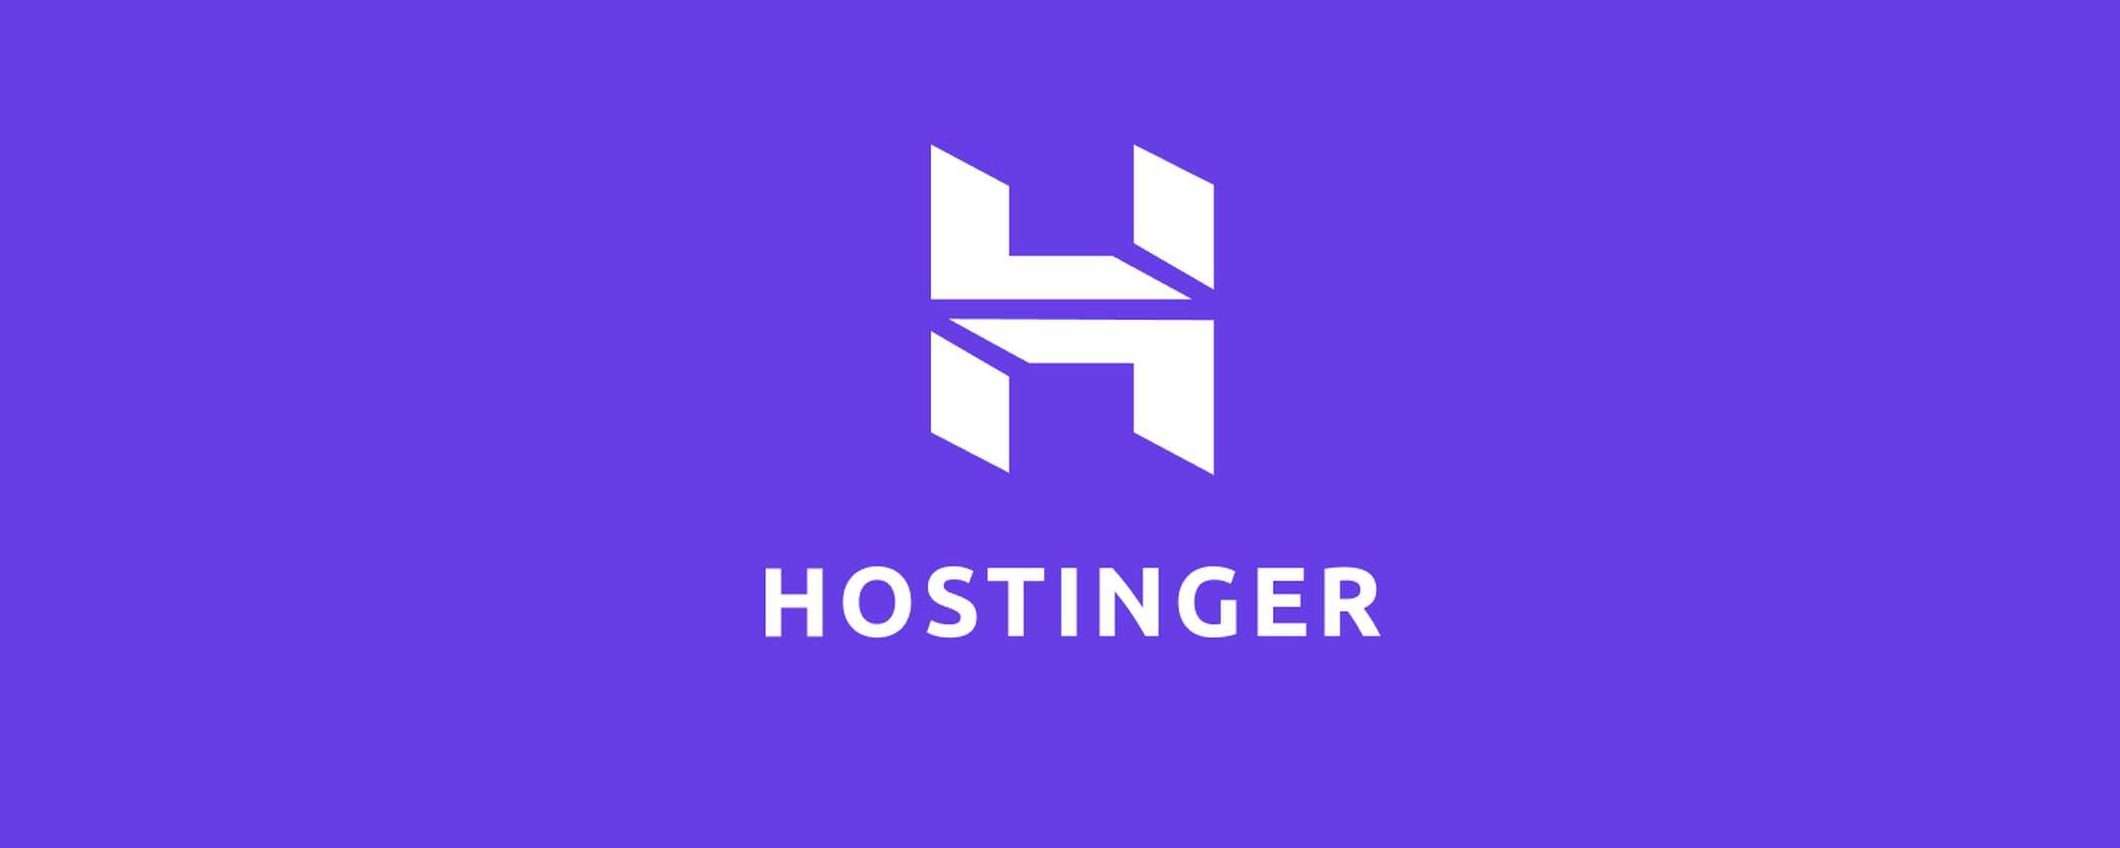 Web hosting per piccole e medie imprese: 3 mesi gratis con Hostinger